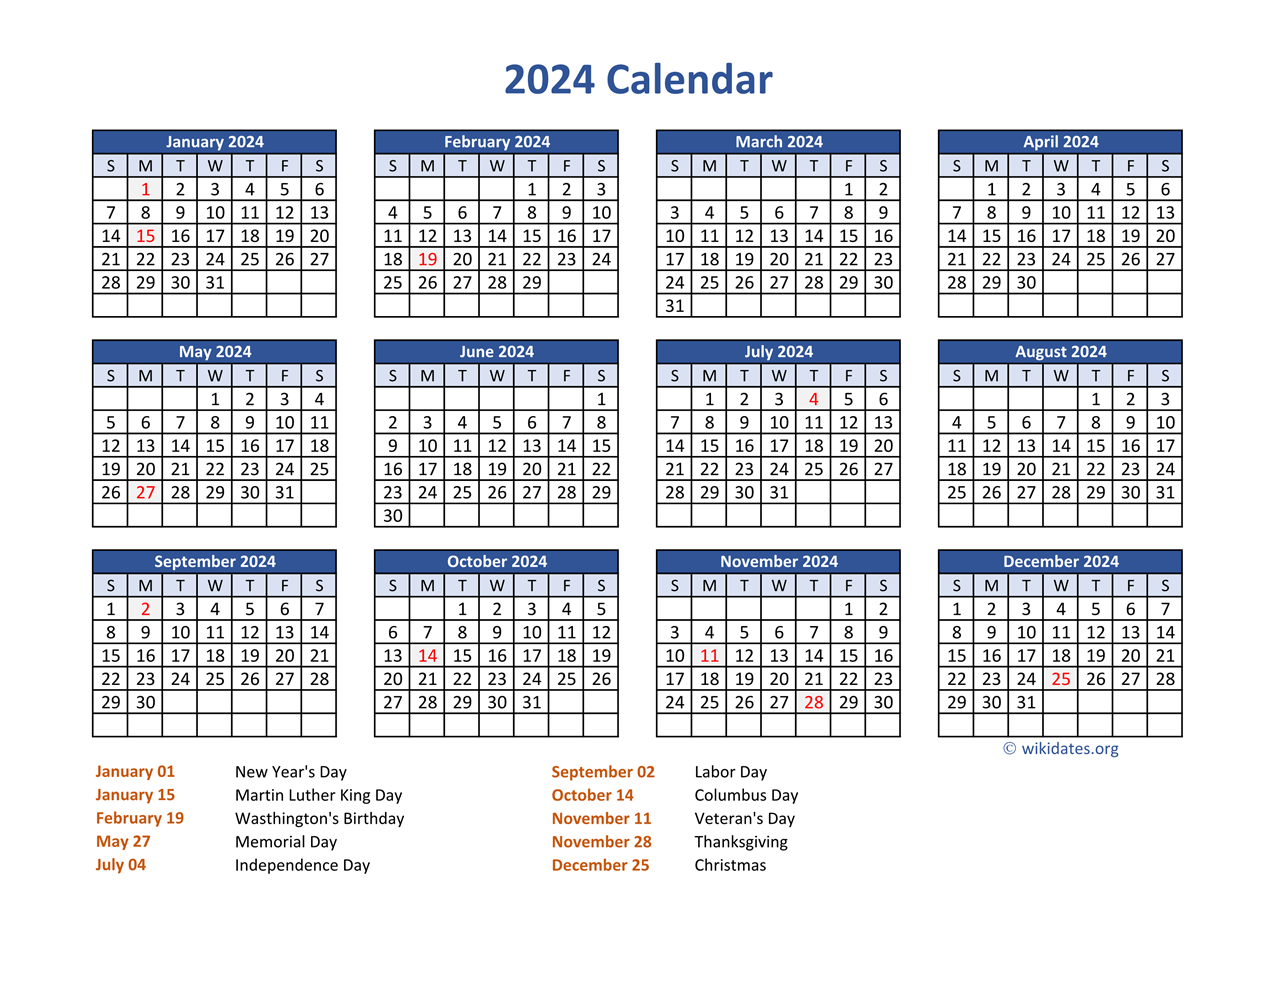 Pdf Calendar 2024 With Federal Holidays | Wikidates for Free Printable 2024 Calendar With Holidays Usa